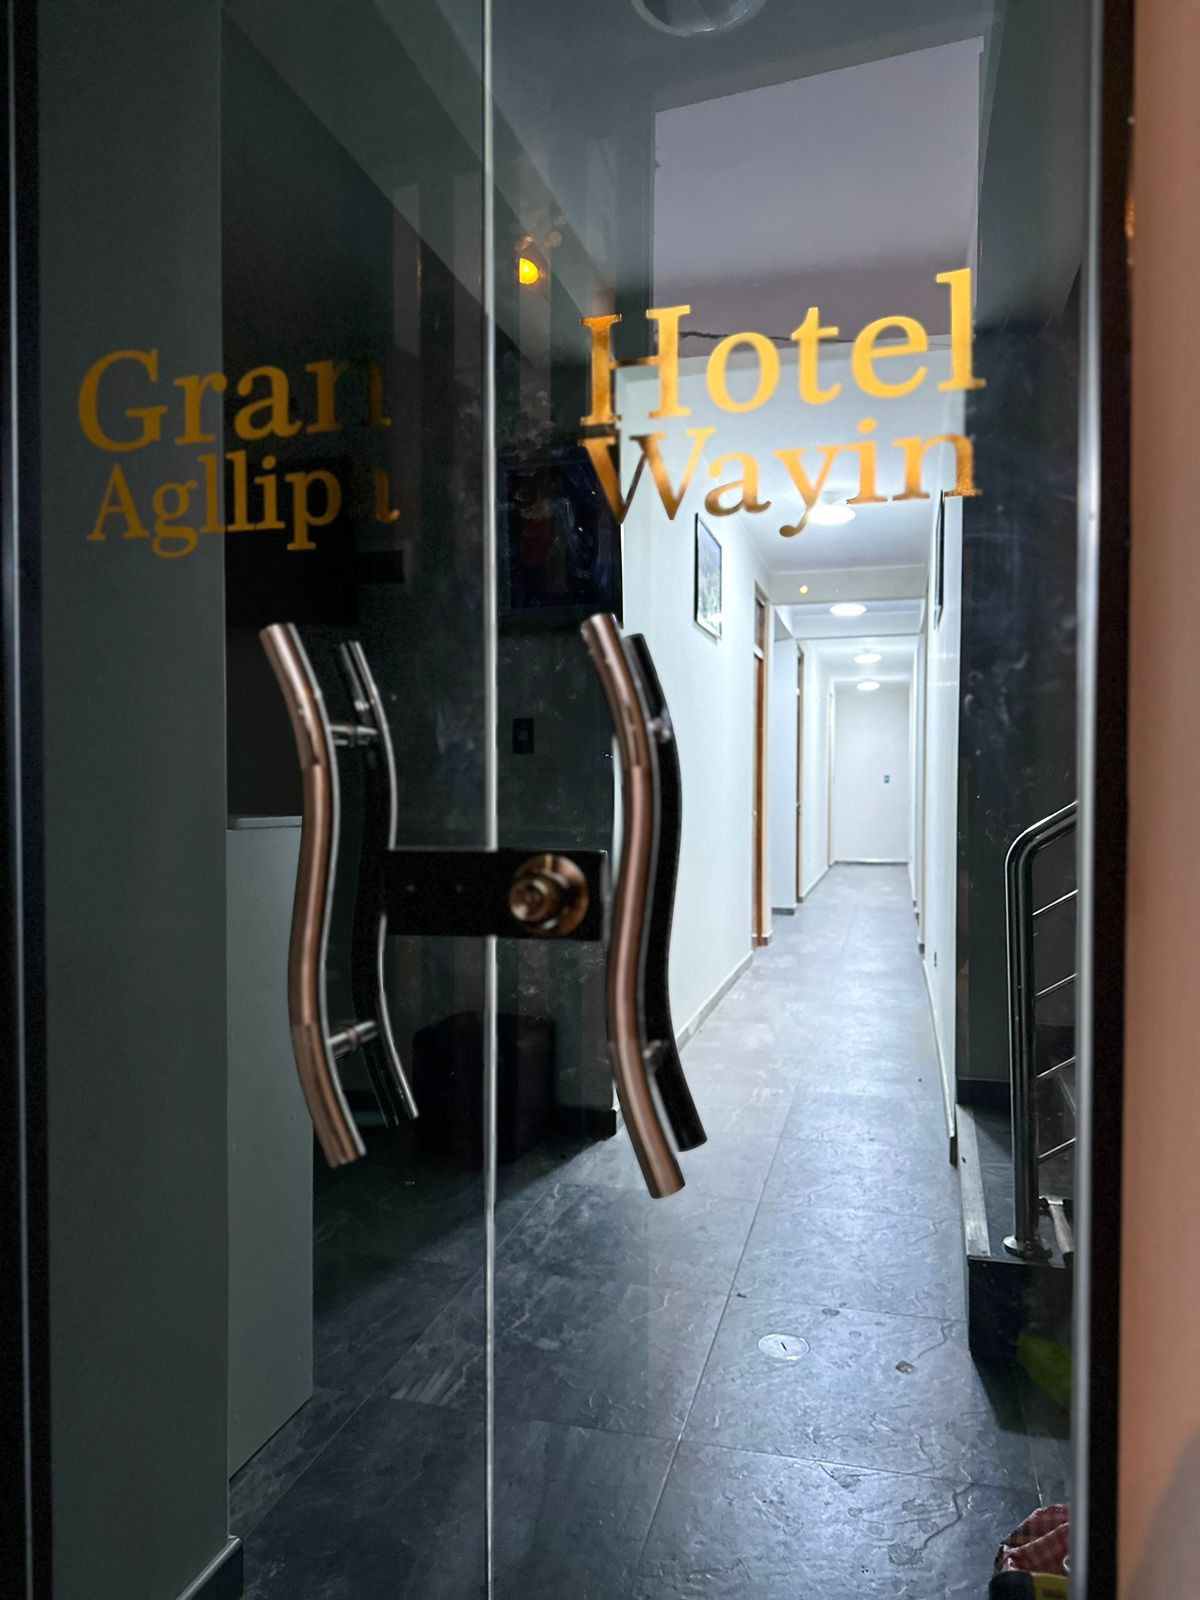 Gran Hotel